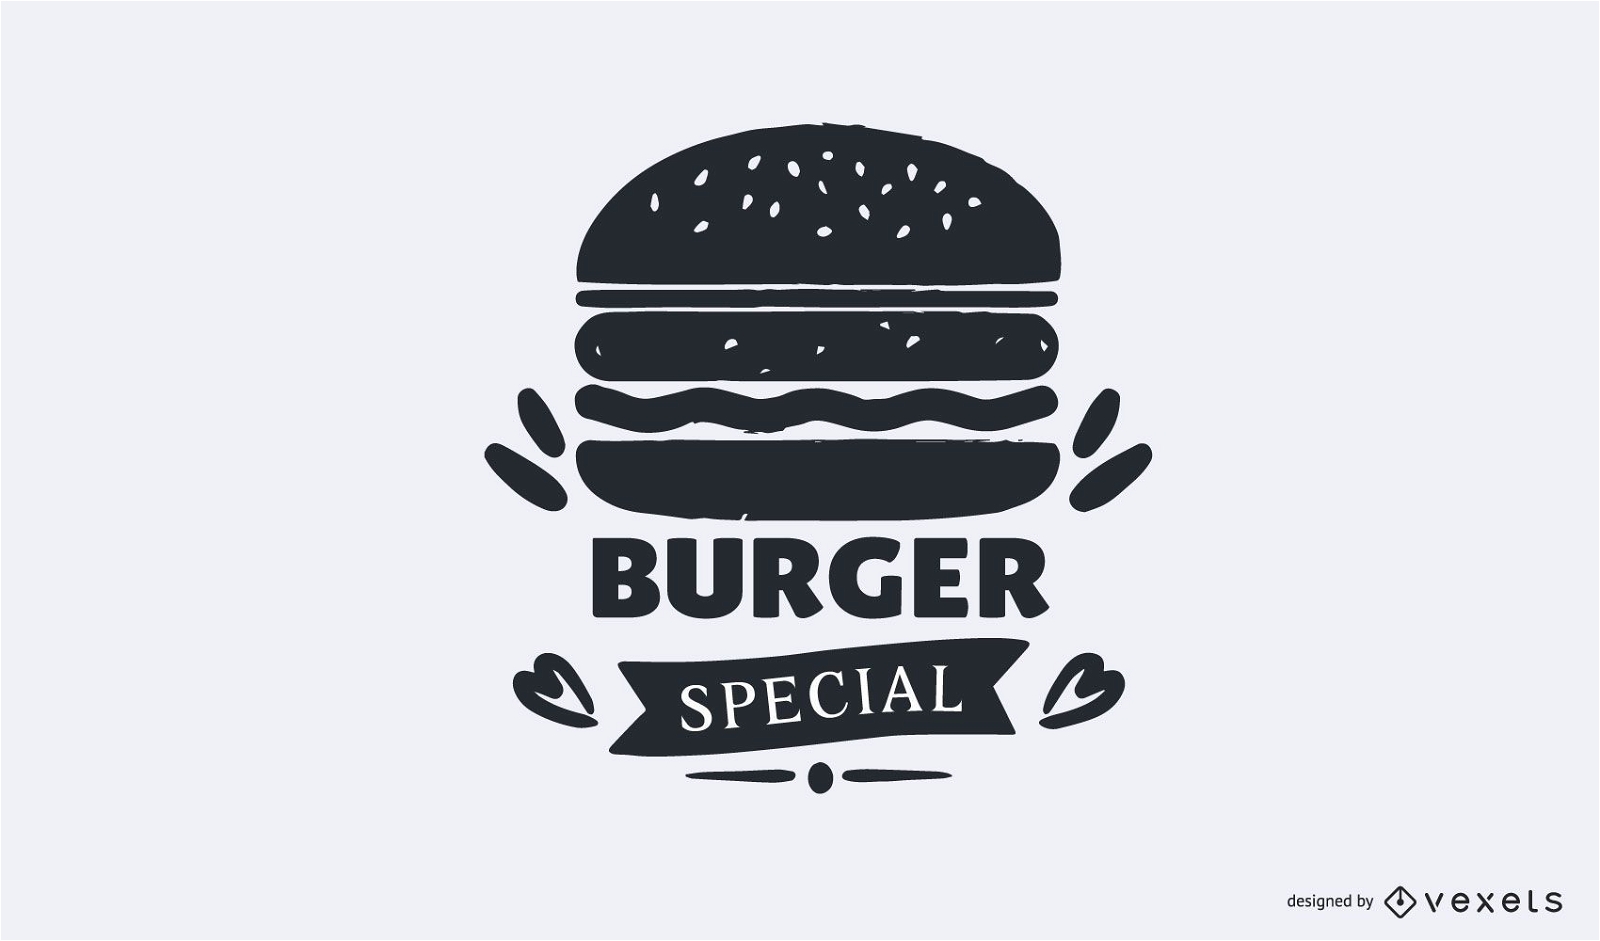 Burger special logo template